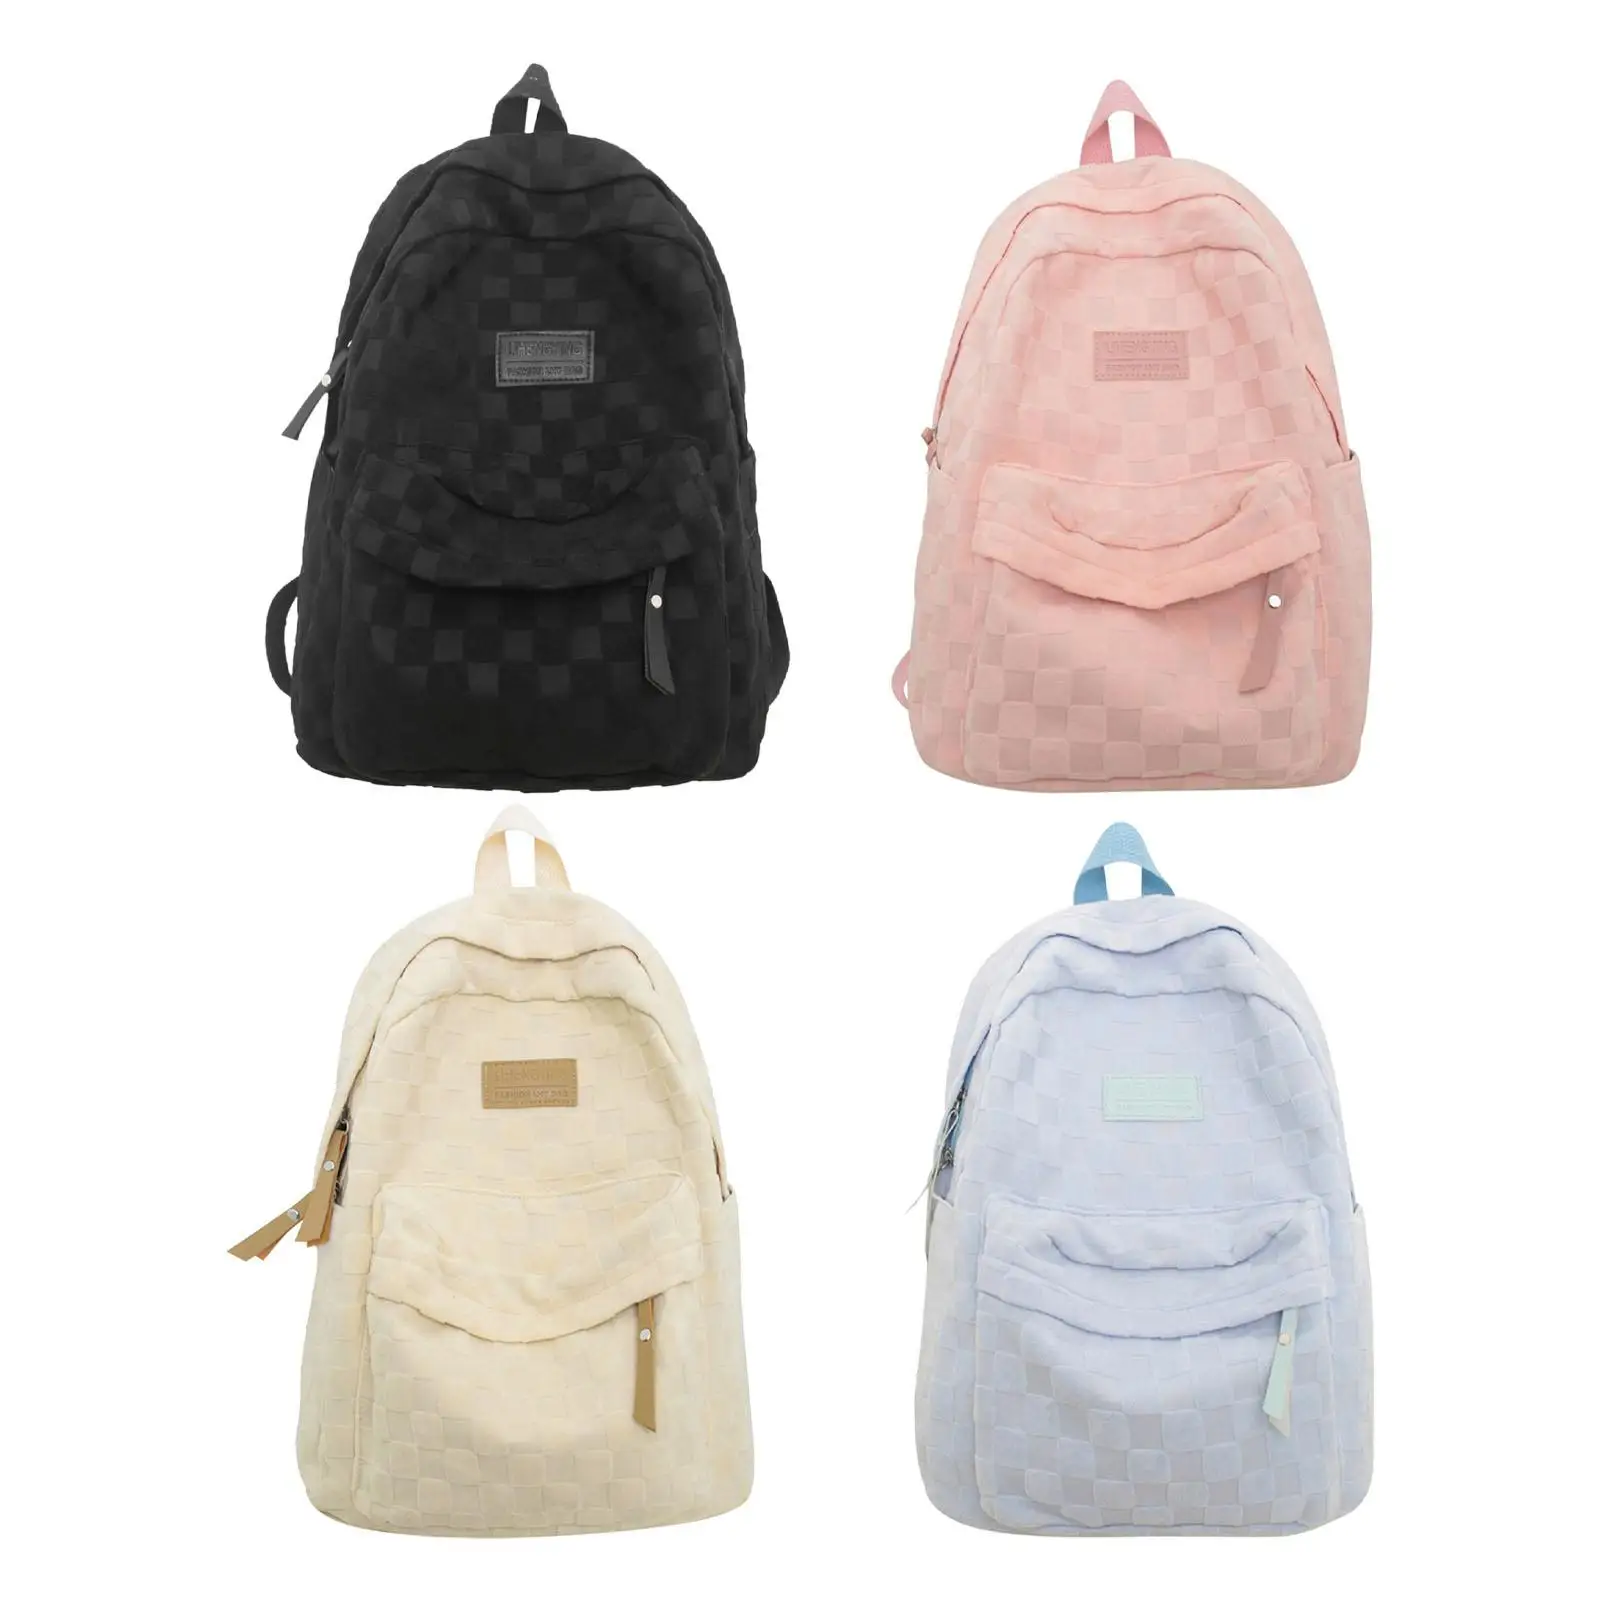 Girls Backpack Fashion Stylish with Adjustable Shoulder Straps Bookbag for Street Backpacking Indoor Outdoor Travel Shopping